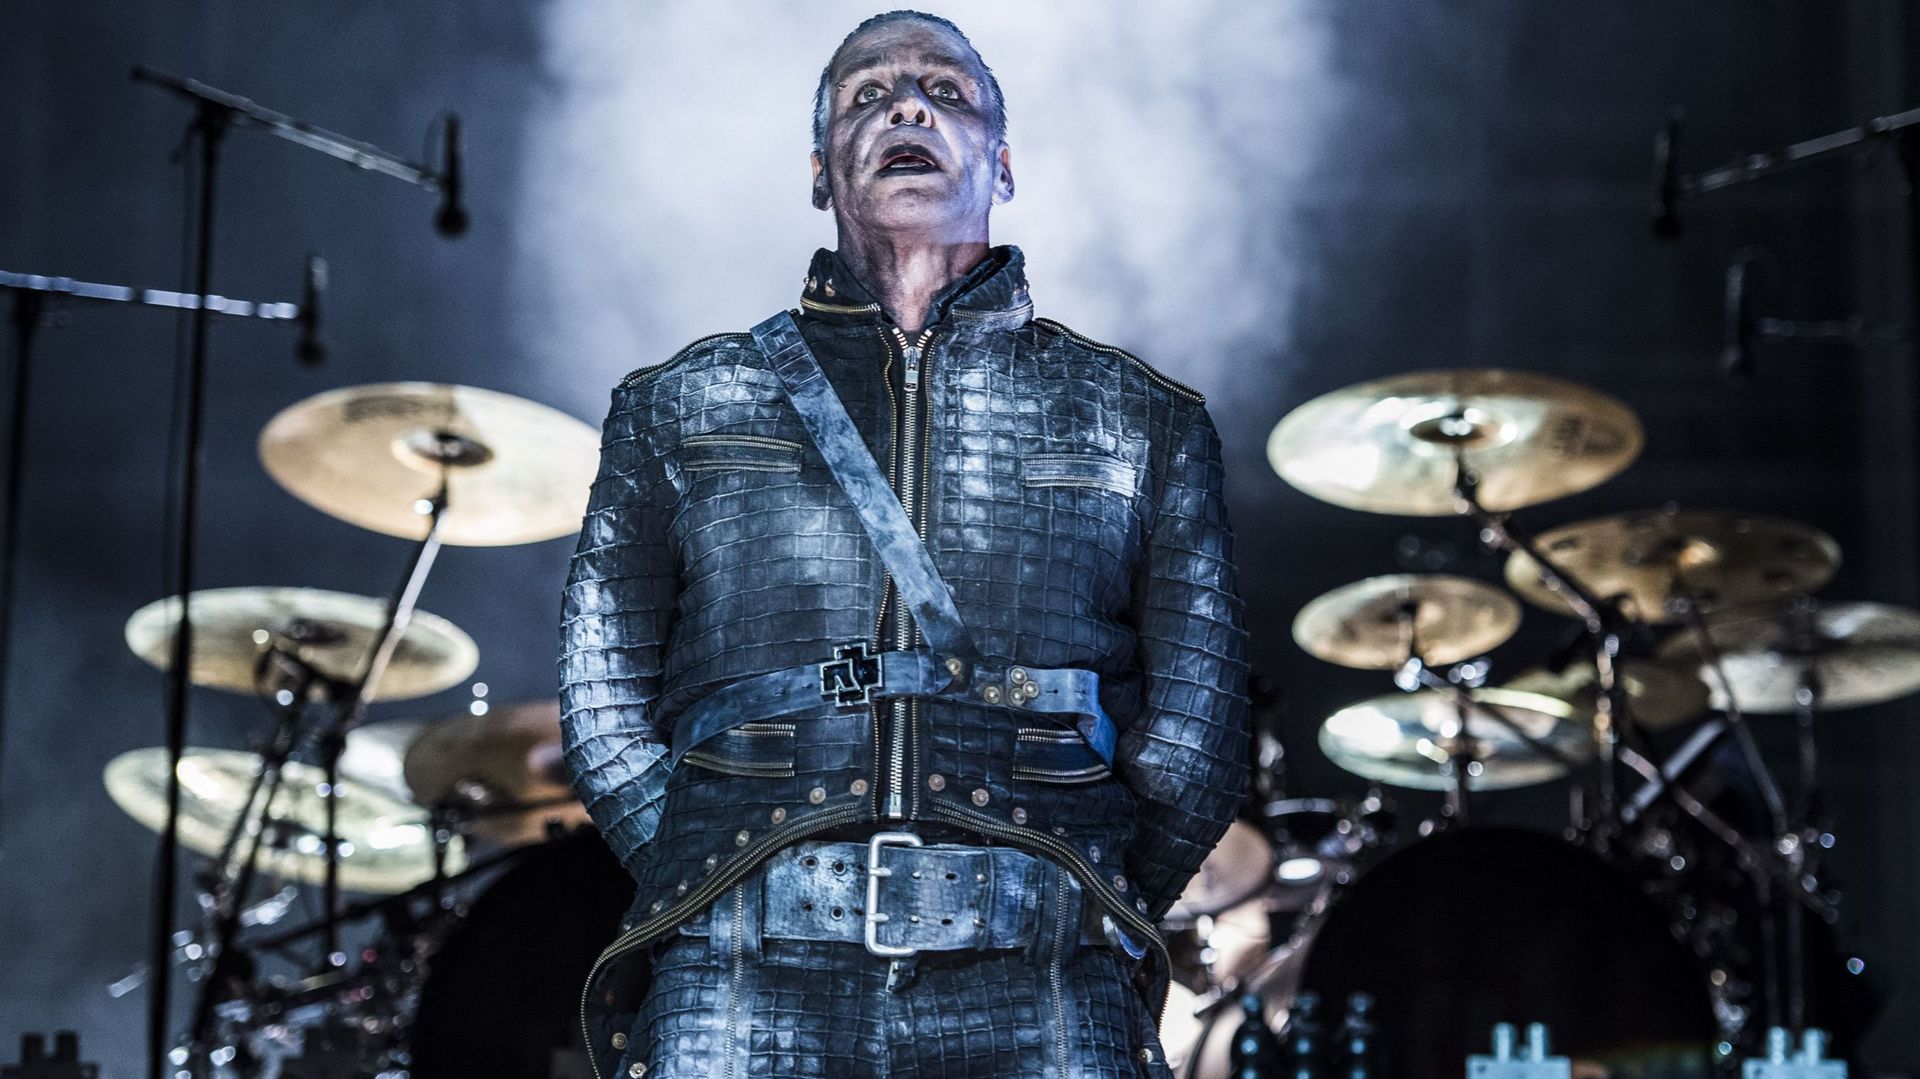 Rammstein live in concert